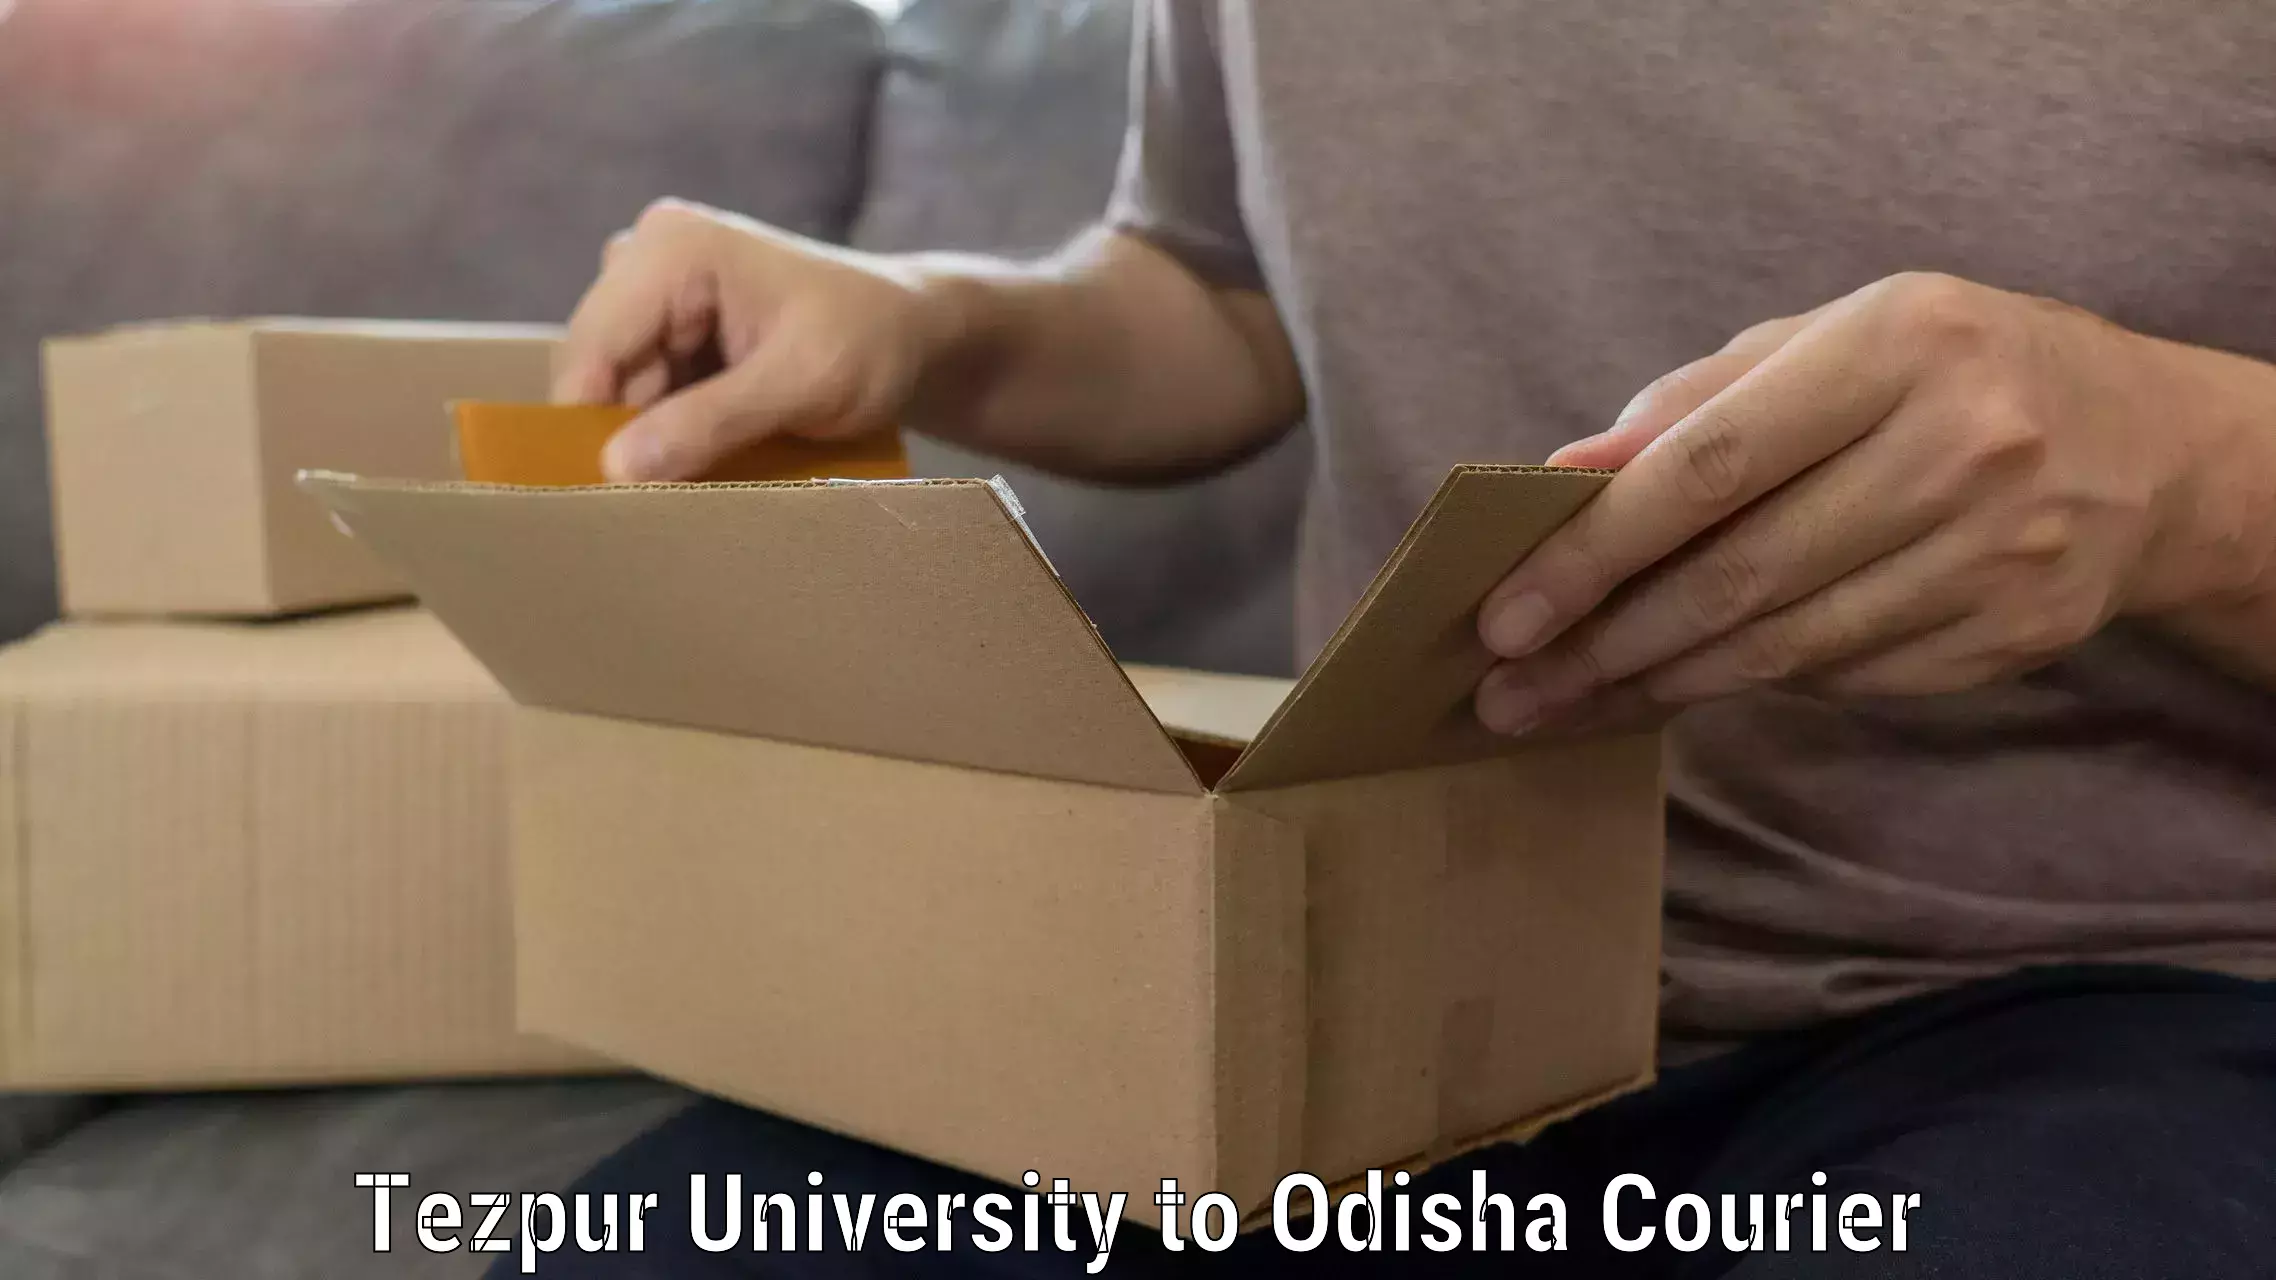 Efficient moving company Tezpur University to Nirakarpur